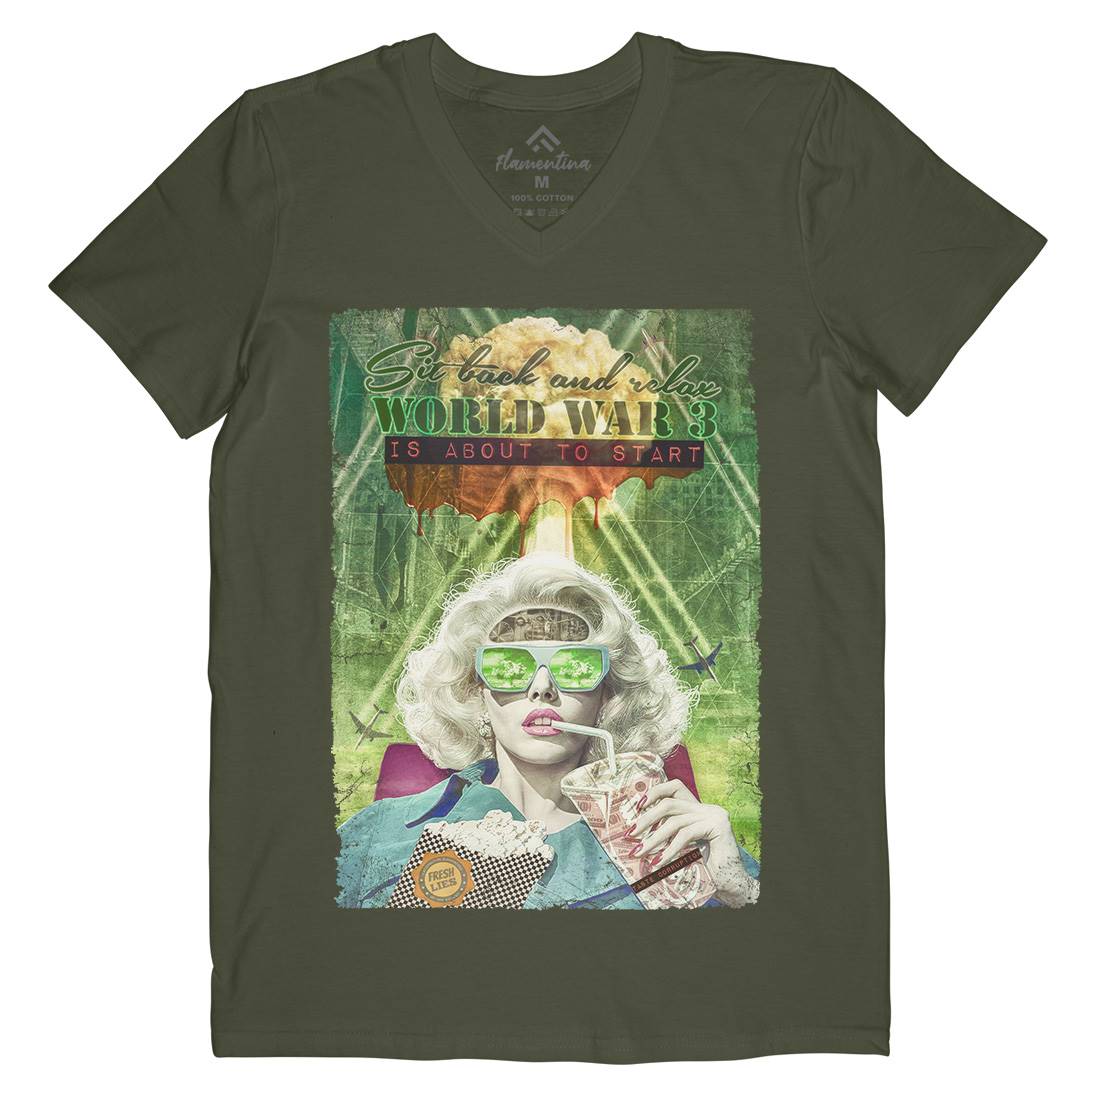 Ww3 Mens Organic V-Neck T-Shirt Illuminati A944